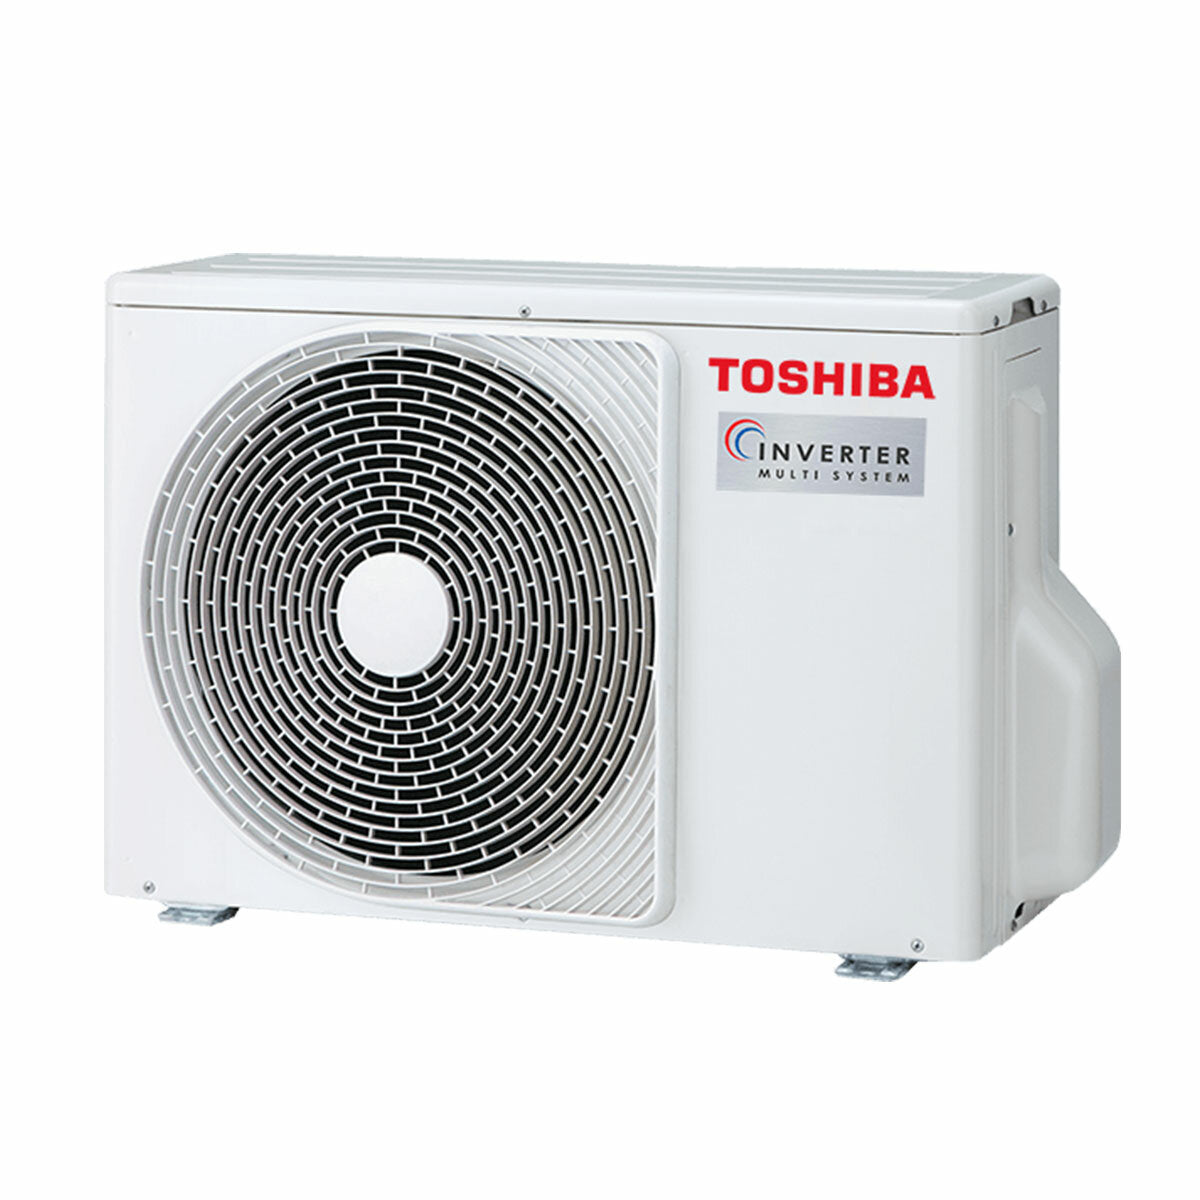 Toshiba ducted air conditioner U2 trial split 7000+7000+12000 BTU inverter A+++ external unit 5.2 kW